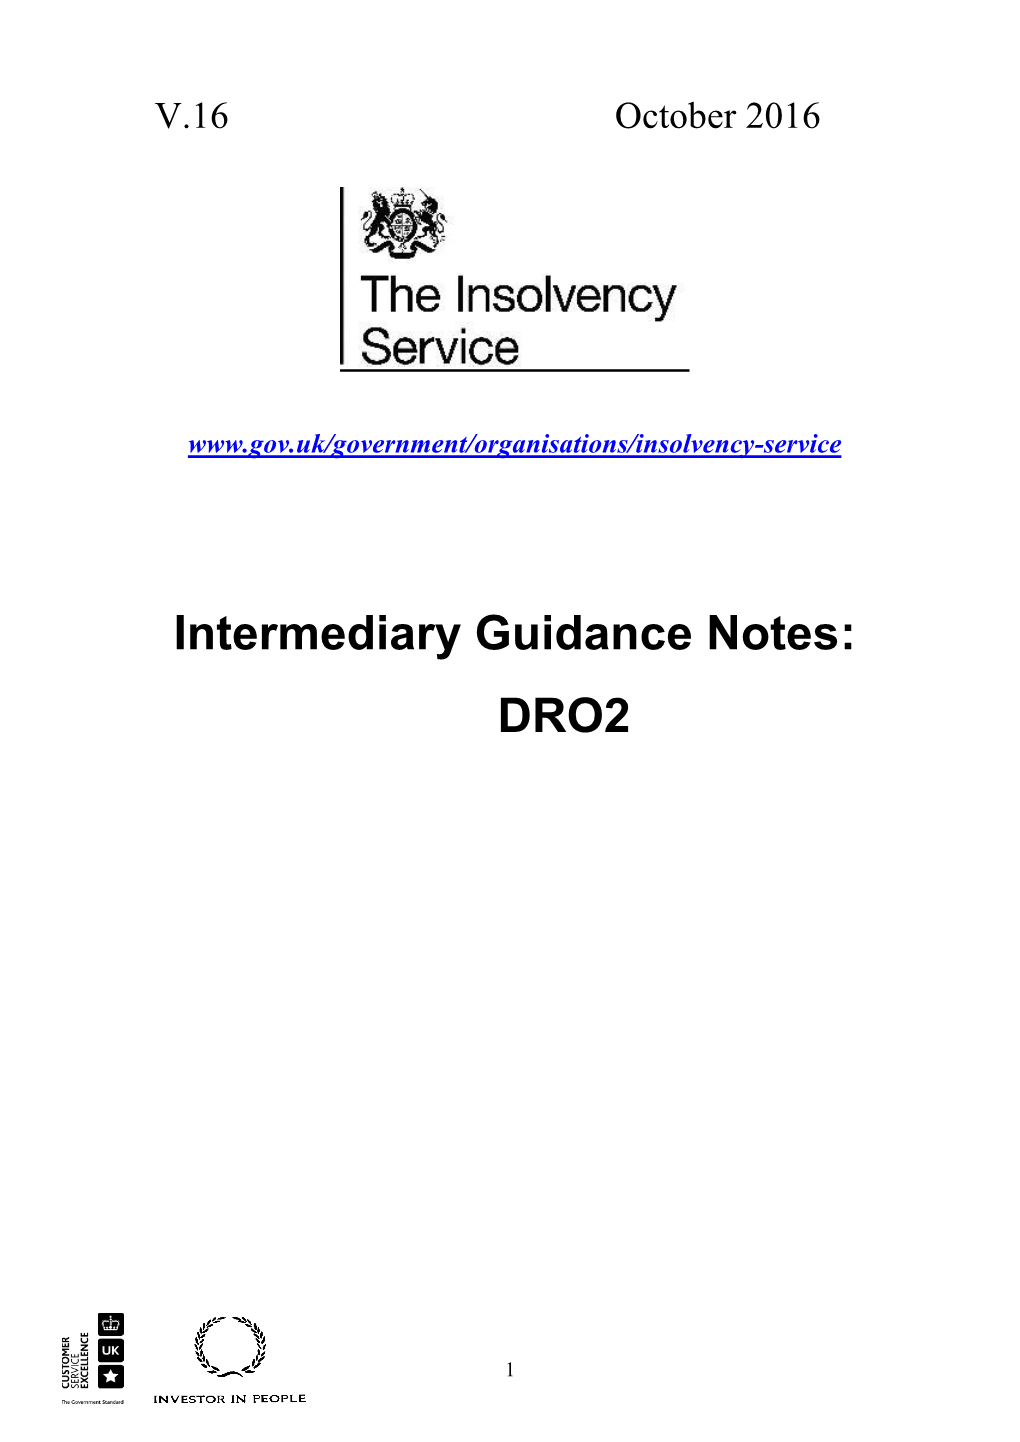 Intermediary Guidance Notes: DRO2